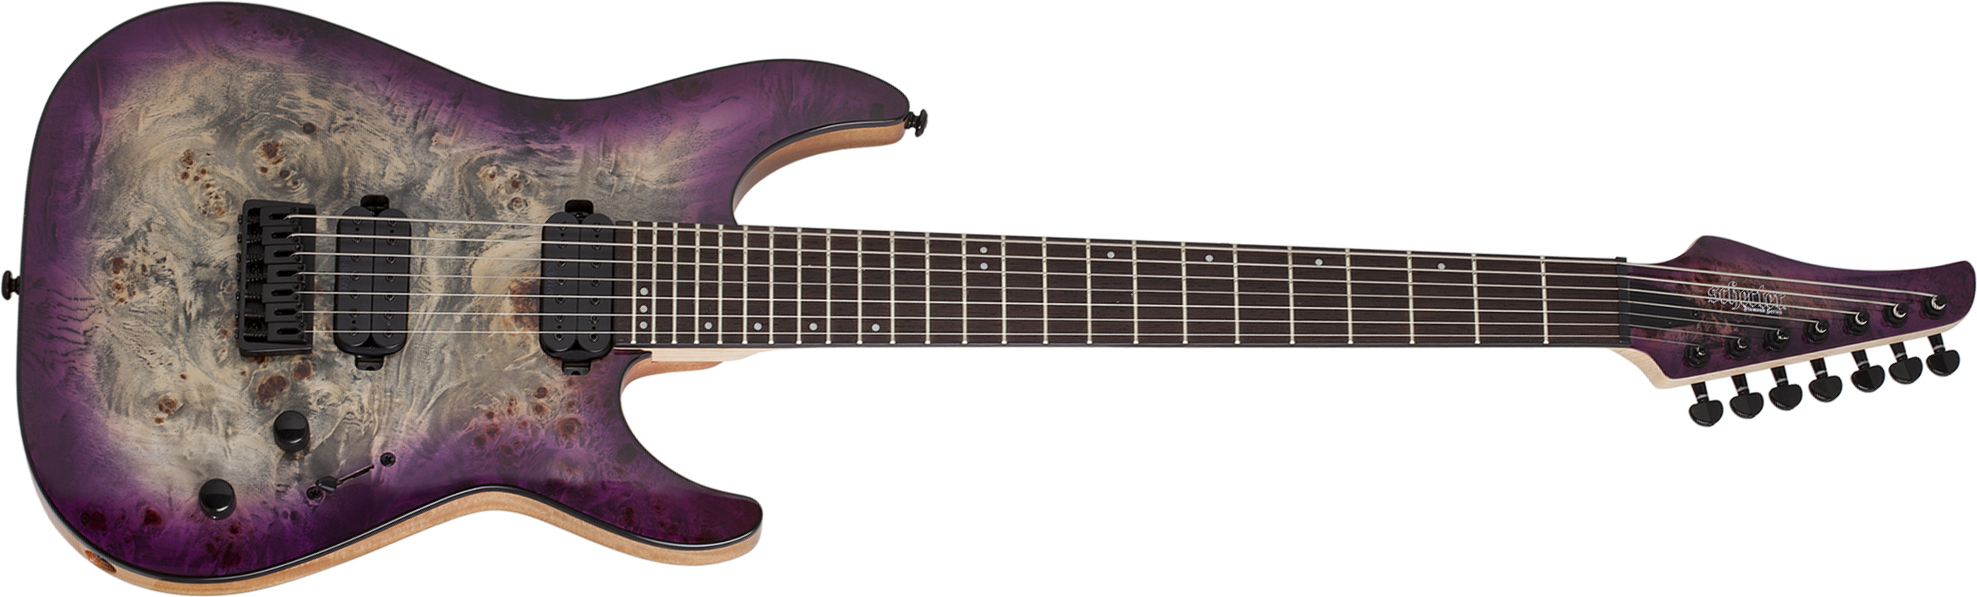 Schecter C-7 Pro 7c 2h Ht Wen - Aurora Burst - 7 string electric guitar - Main picture